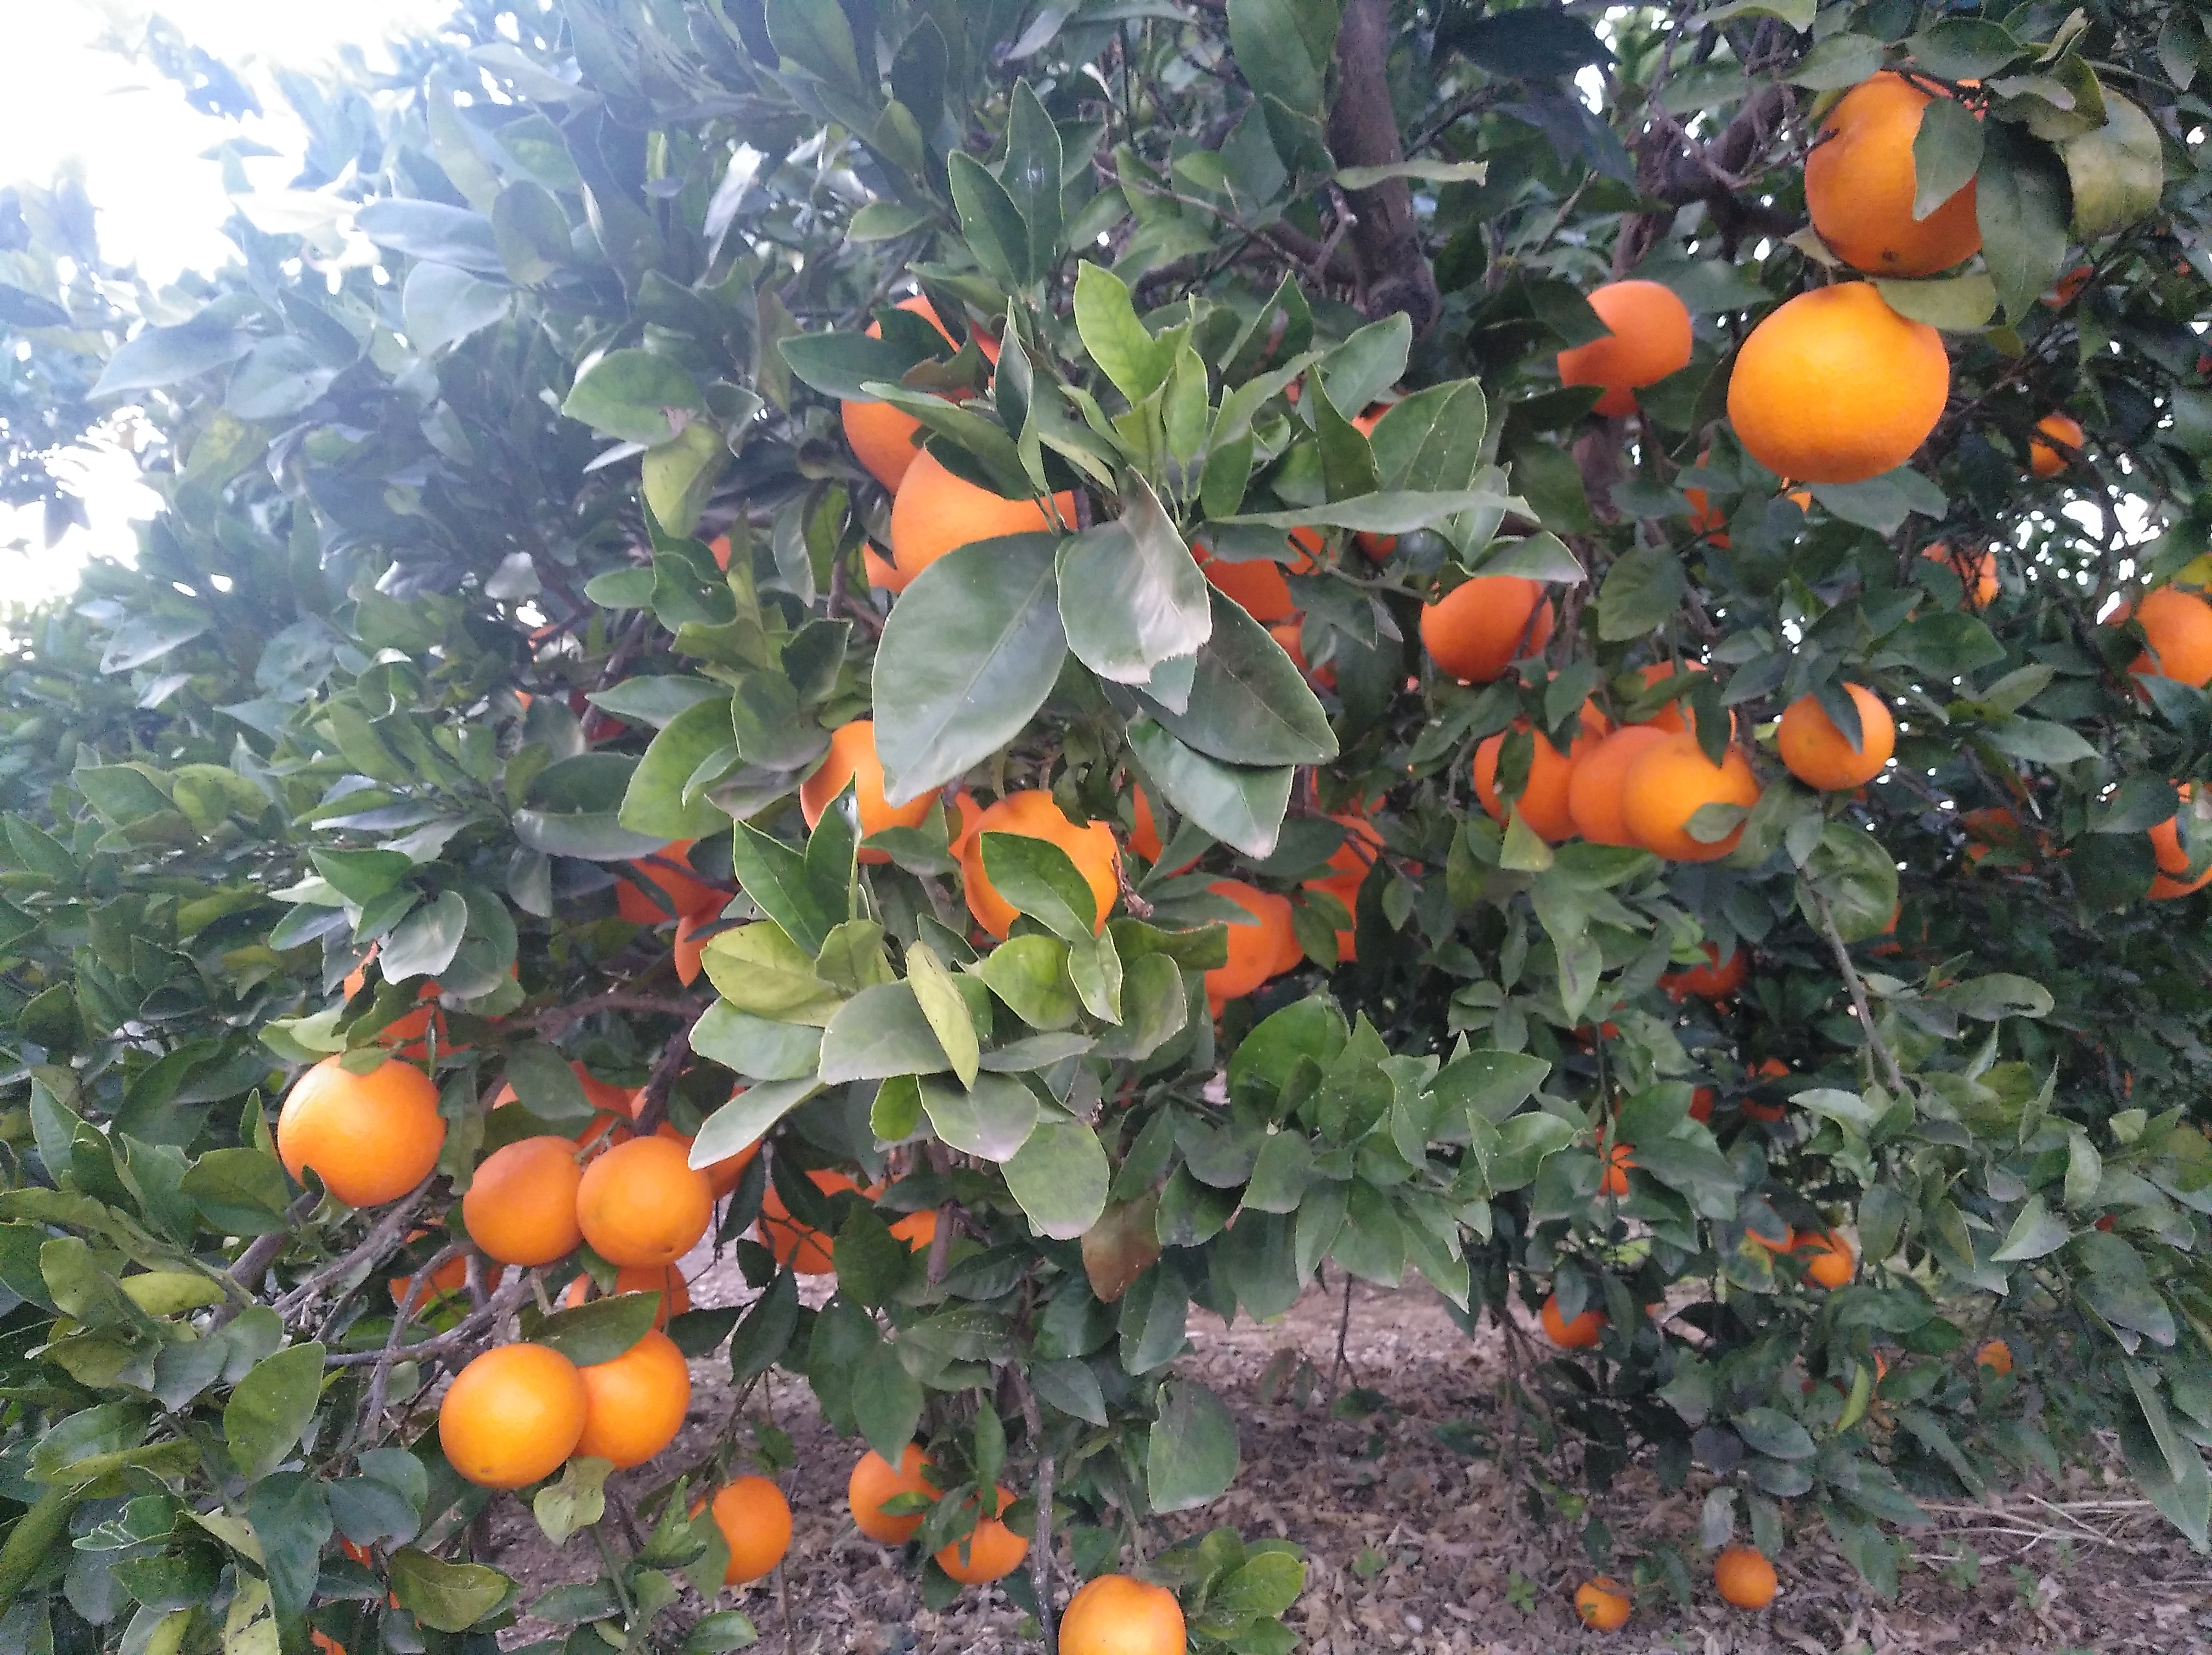 https://www.agroboca.com/productor/naranjas-fruits-del-mas/venta-al-mayor/naranja-navelina-valenciana-para-zumo-10-kg